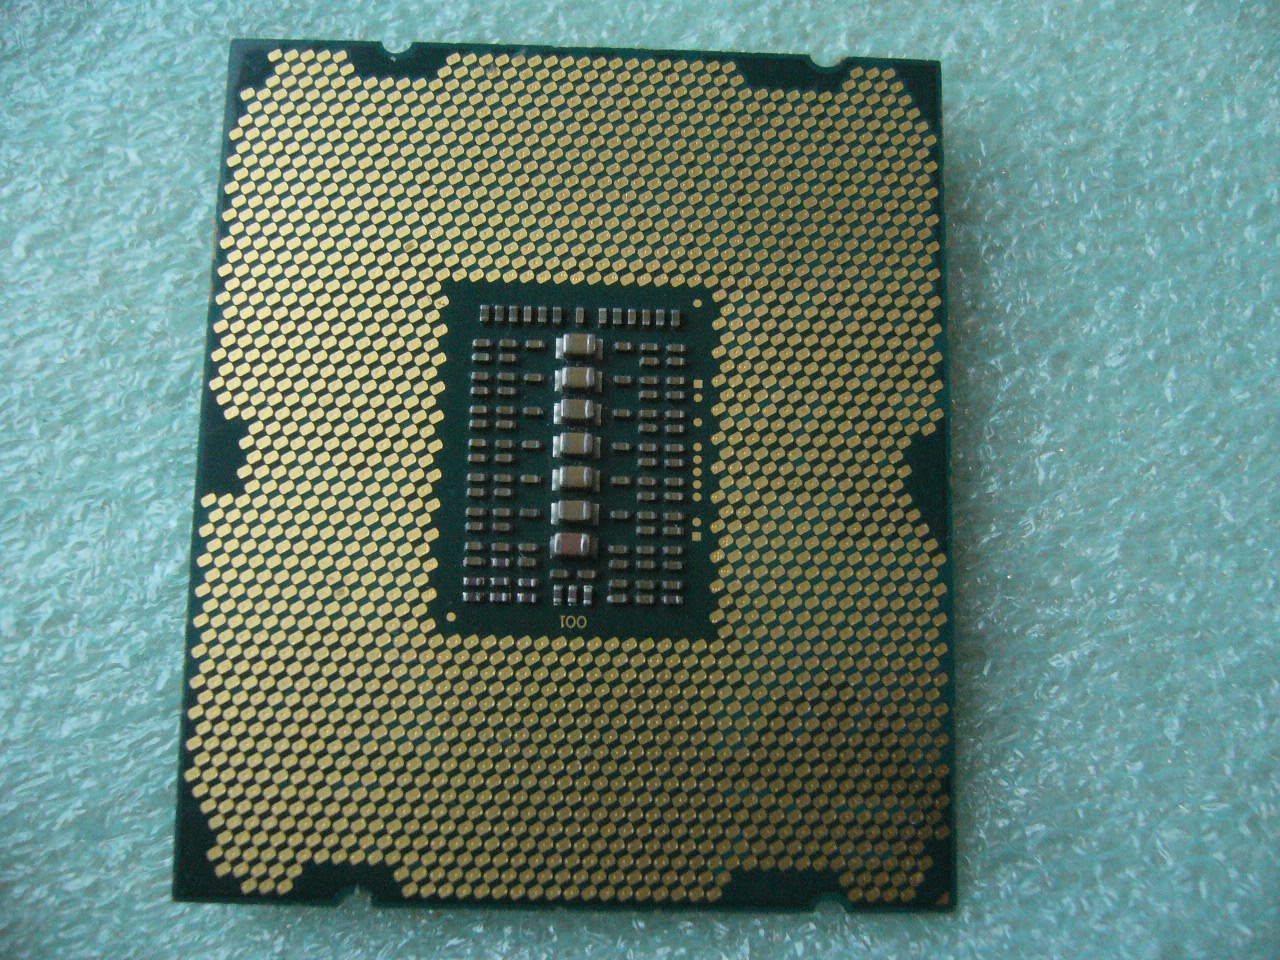 QTY 1x Intel CPU E5 V2 ES CPU Eight-Cores 1.6Ghz 20MB LGA2011 QDU4 - Click Image to Close